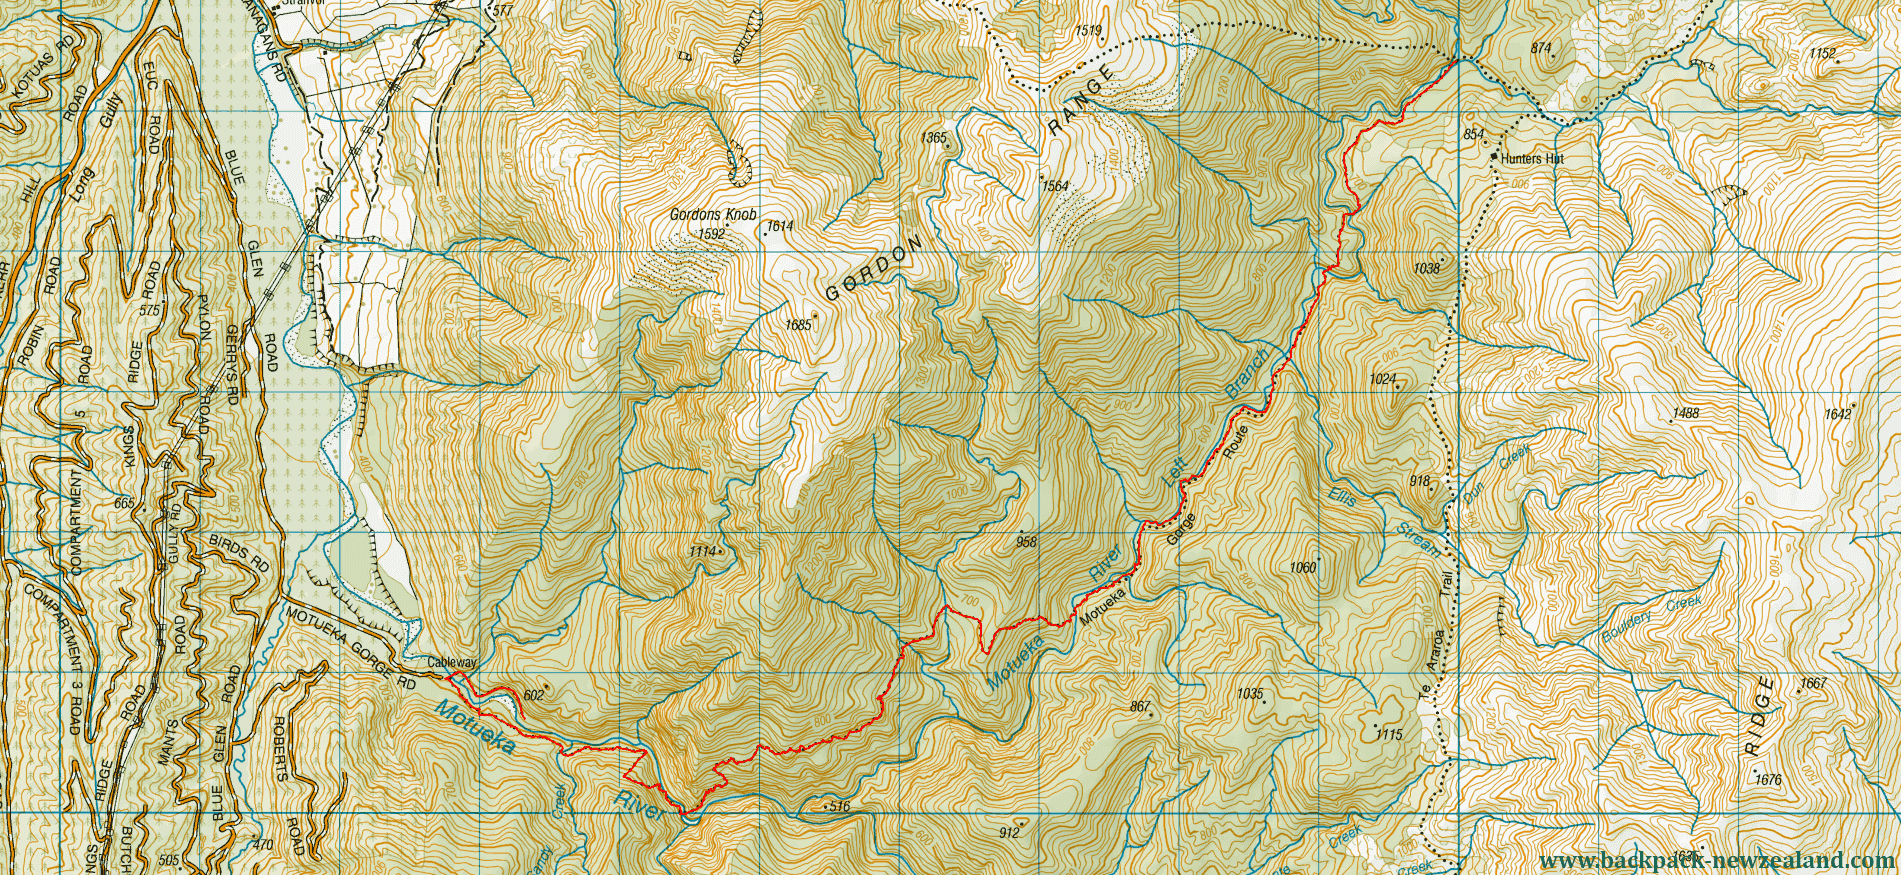 Motueka Gorge Route Map - New Zealand Tracks